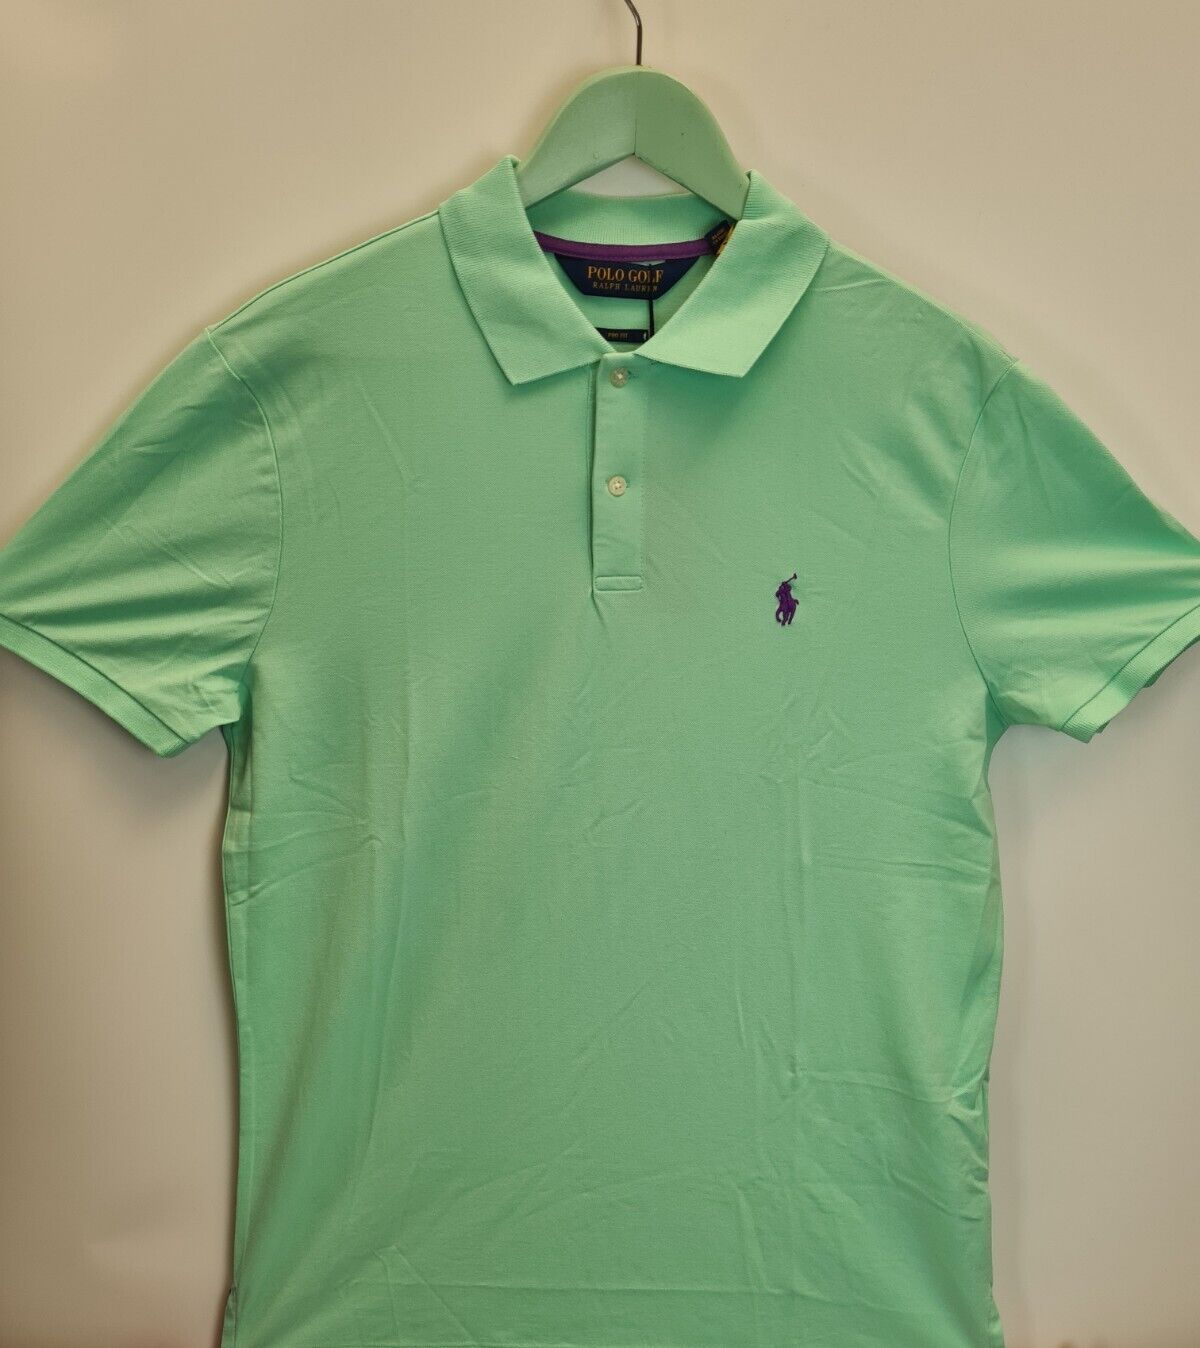 Polo Golf New Englandprep Blue ss kc Pro Fit Tshirt Size M****Ref V158